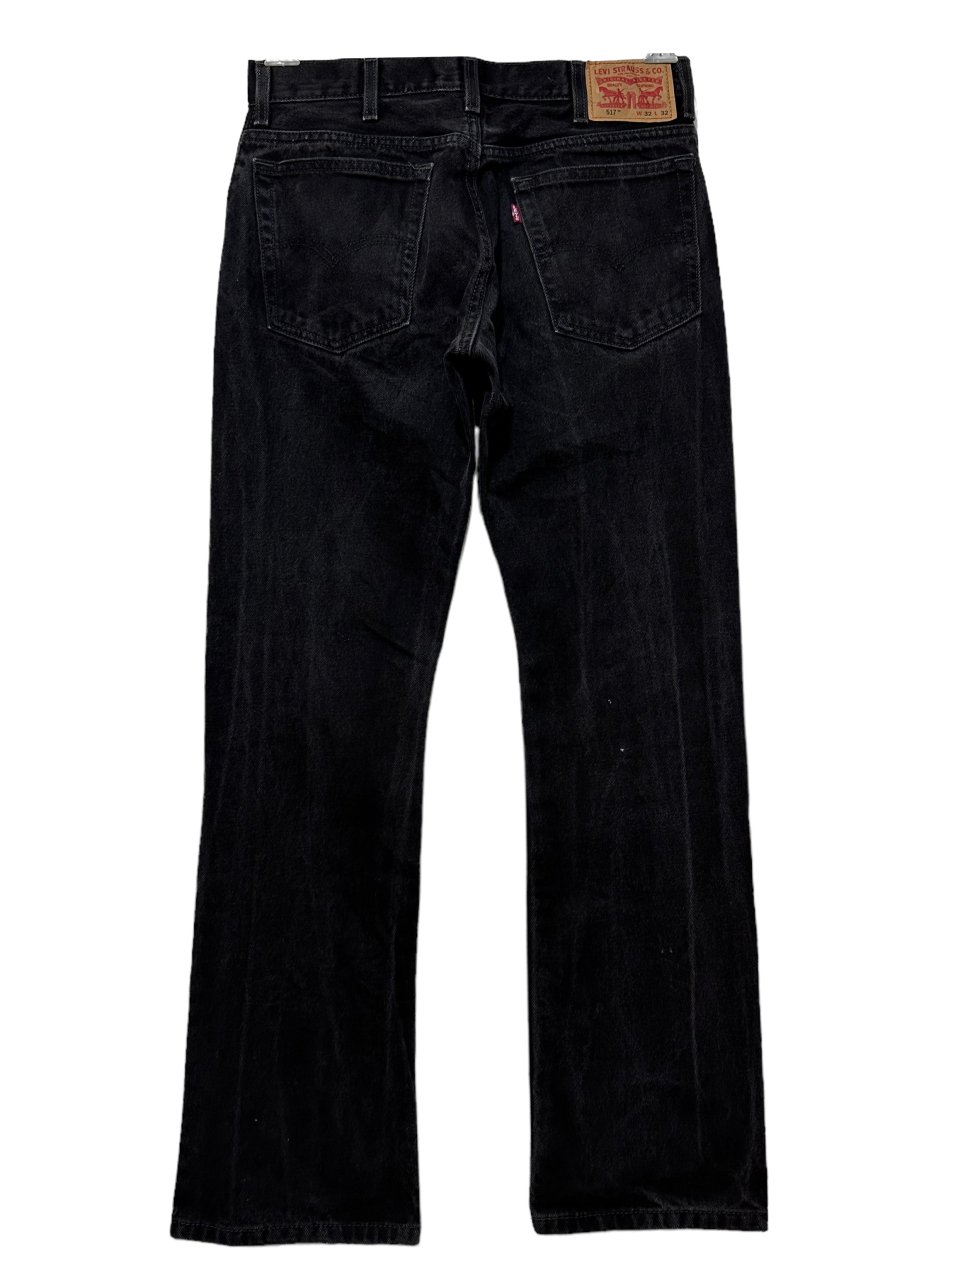 00s Levi's 517 Black Denim Pants 黒 W32×L32 リーバイス Levis